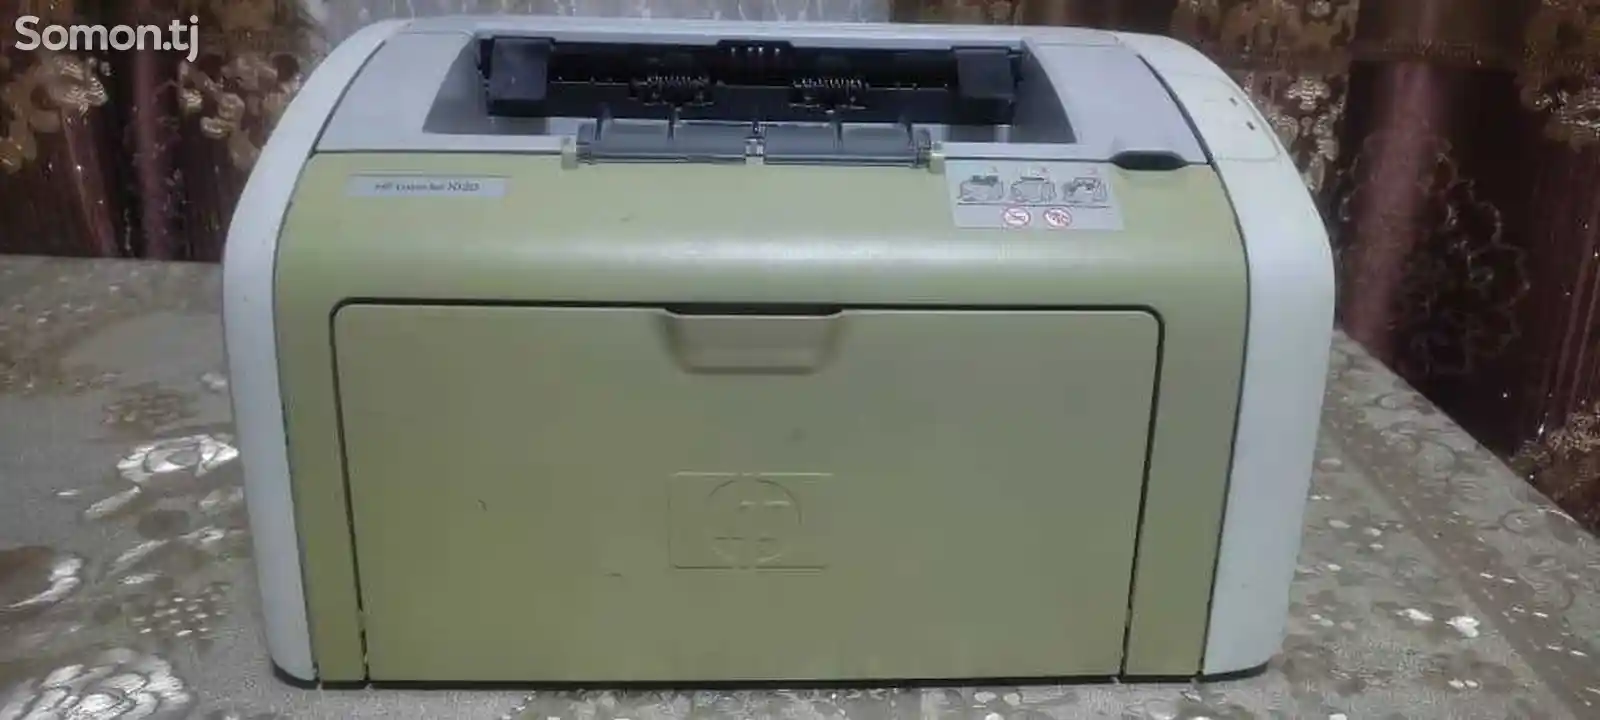 Принтер hp1020-3